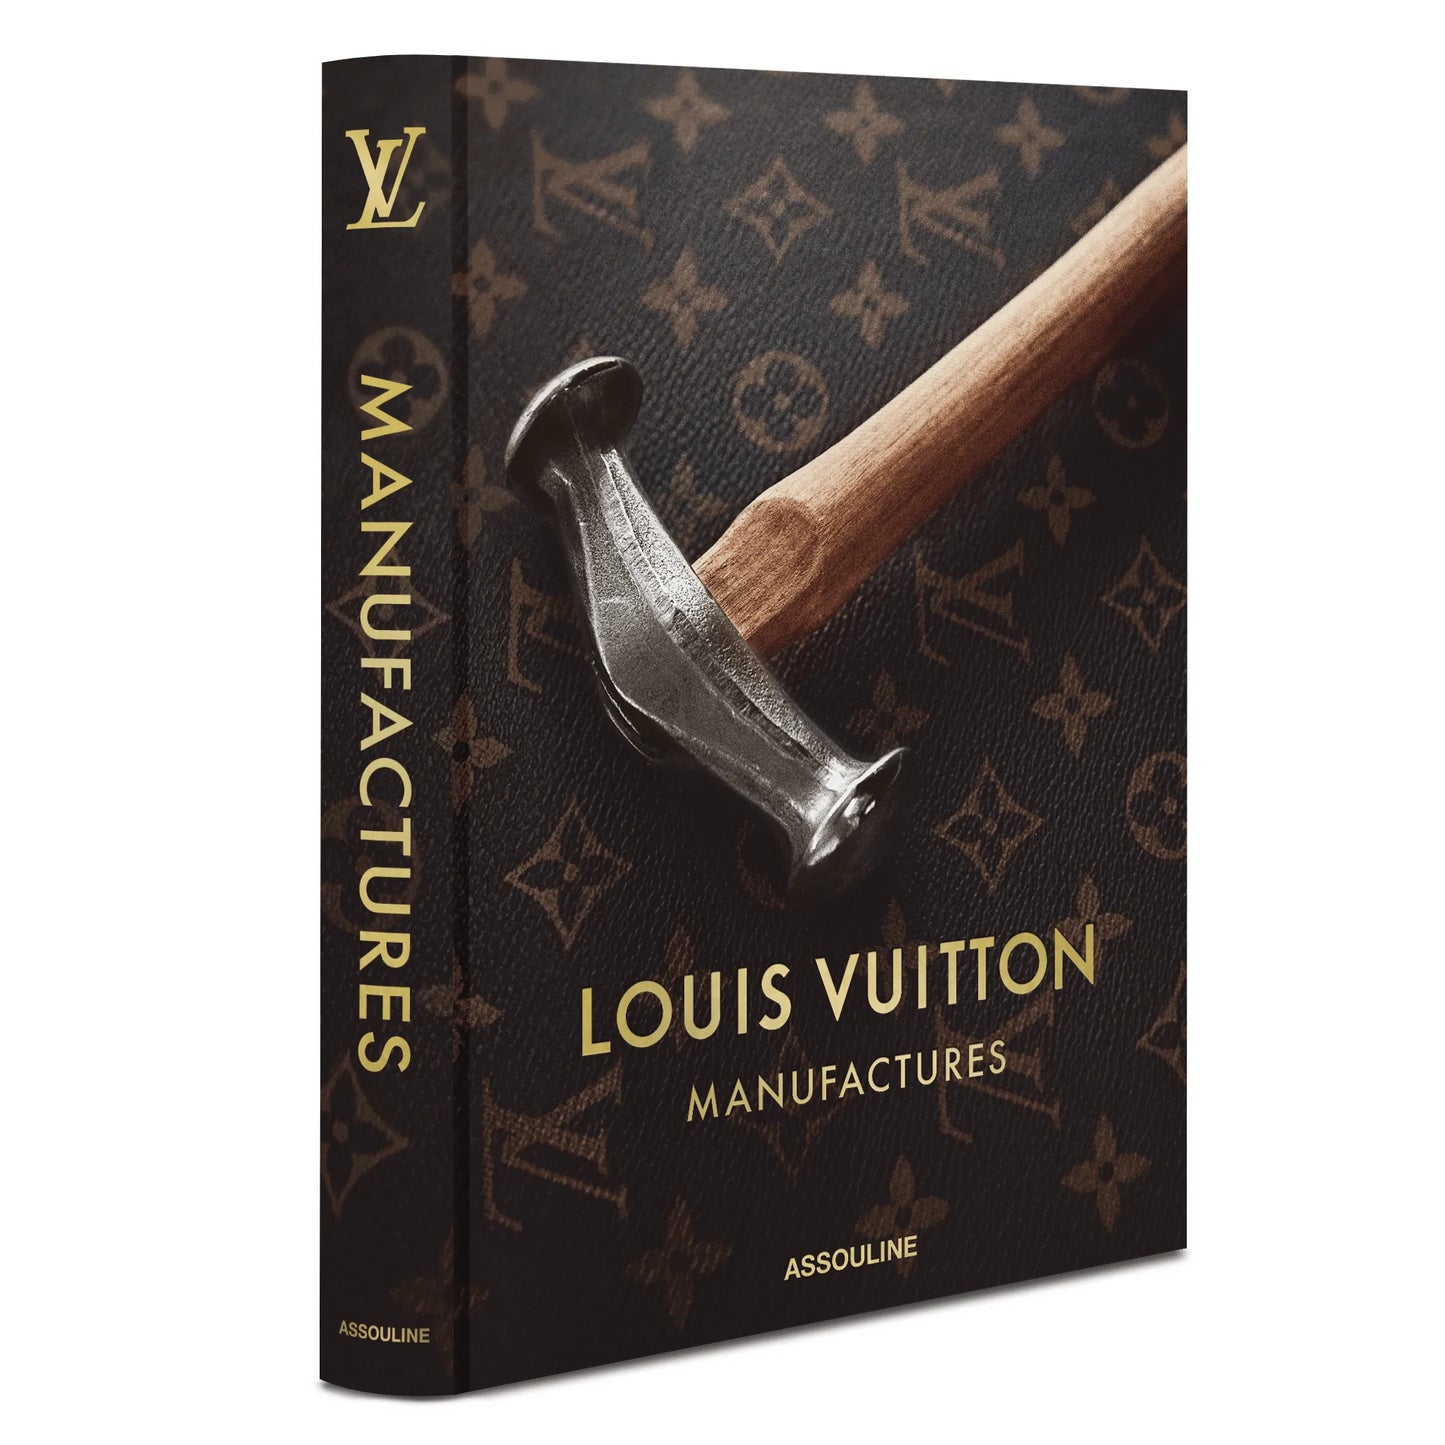 LOUIS VUITTON MANUFACTURES BOOK - $140